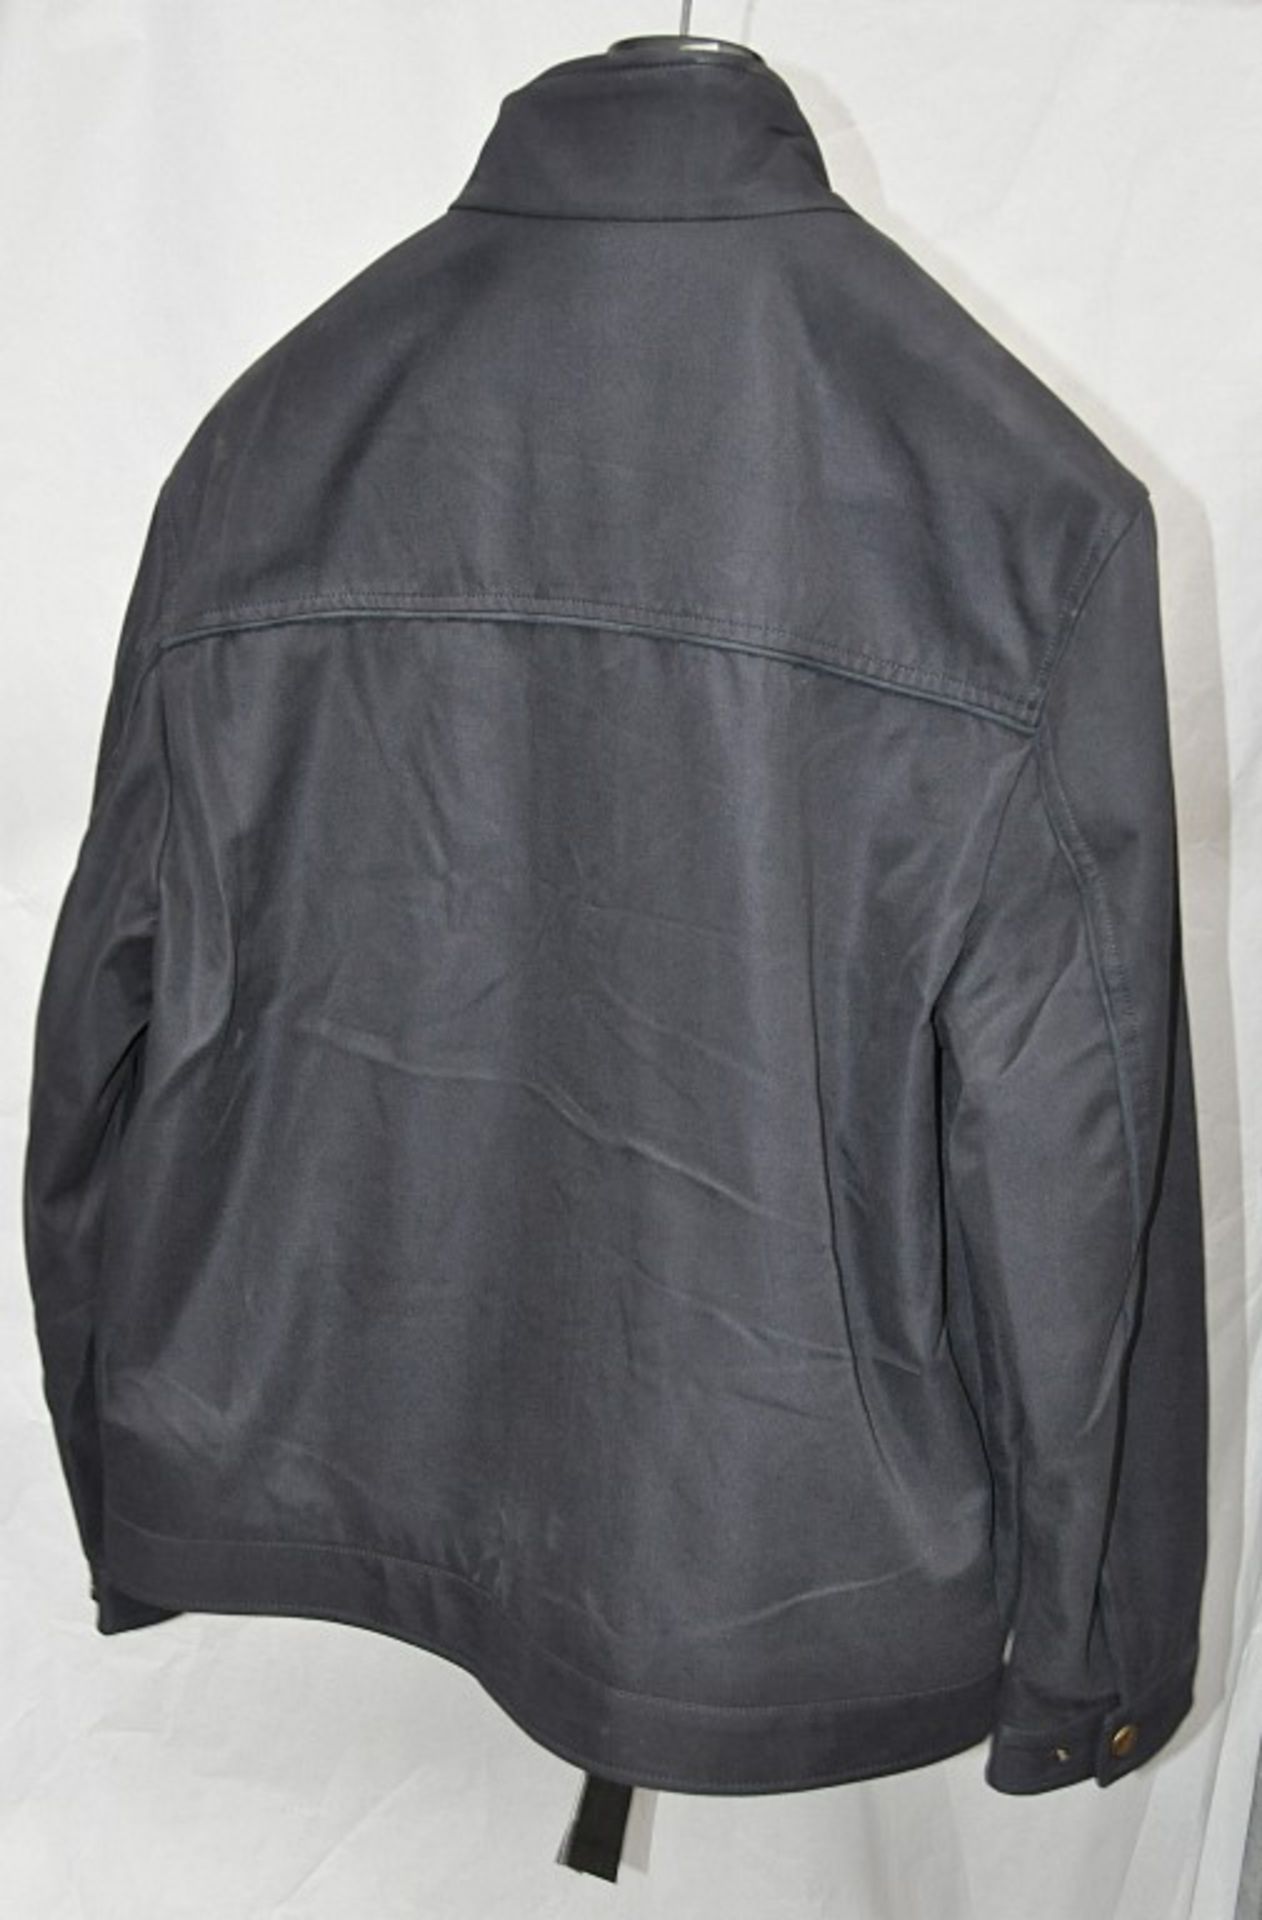 1 x Men's Long Sleeve Casual Jacket By International Luxury Brand "Vasto" (BAJ72241) – Size: Large – - Image 2 of 6